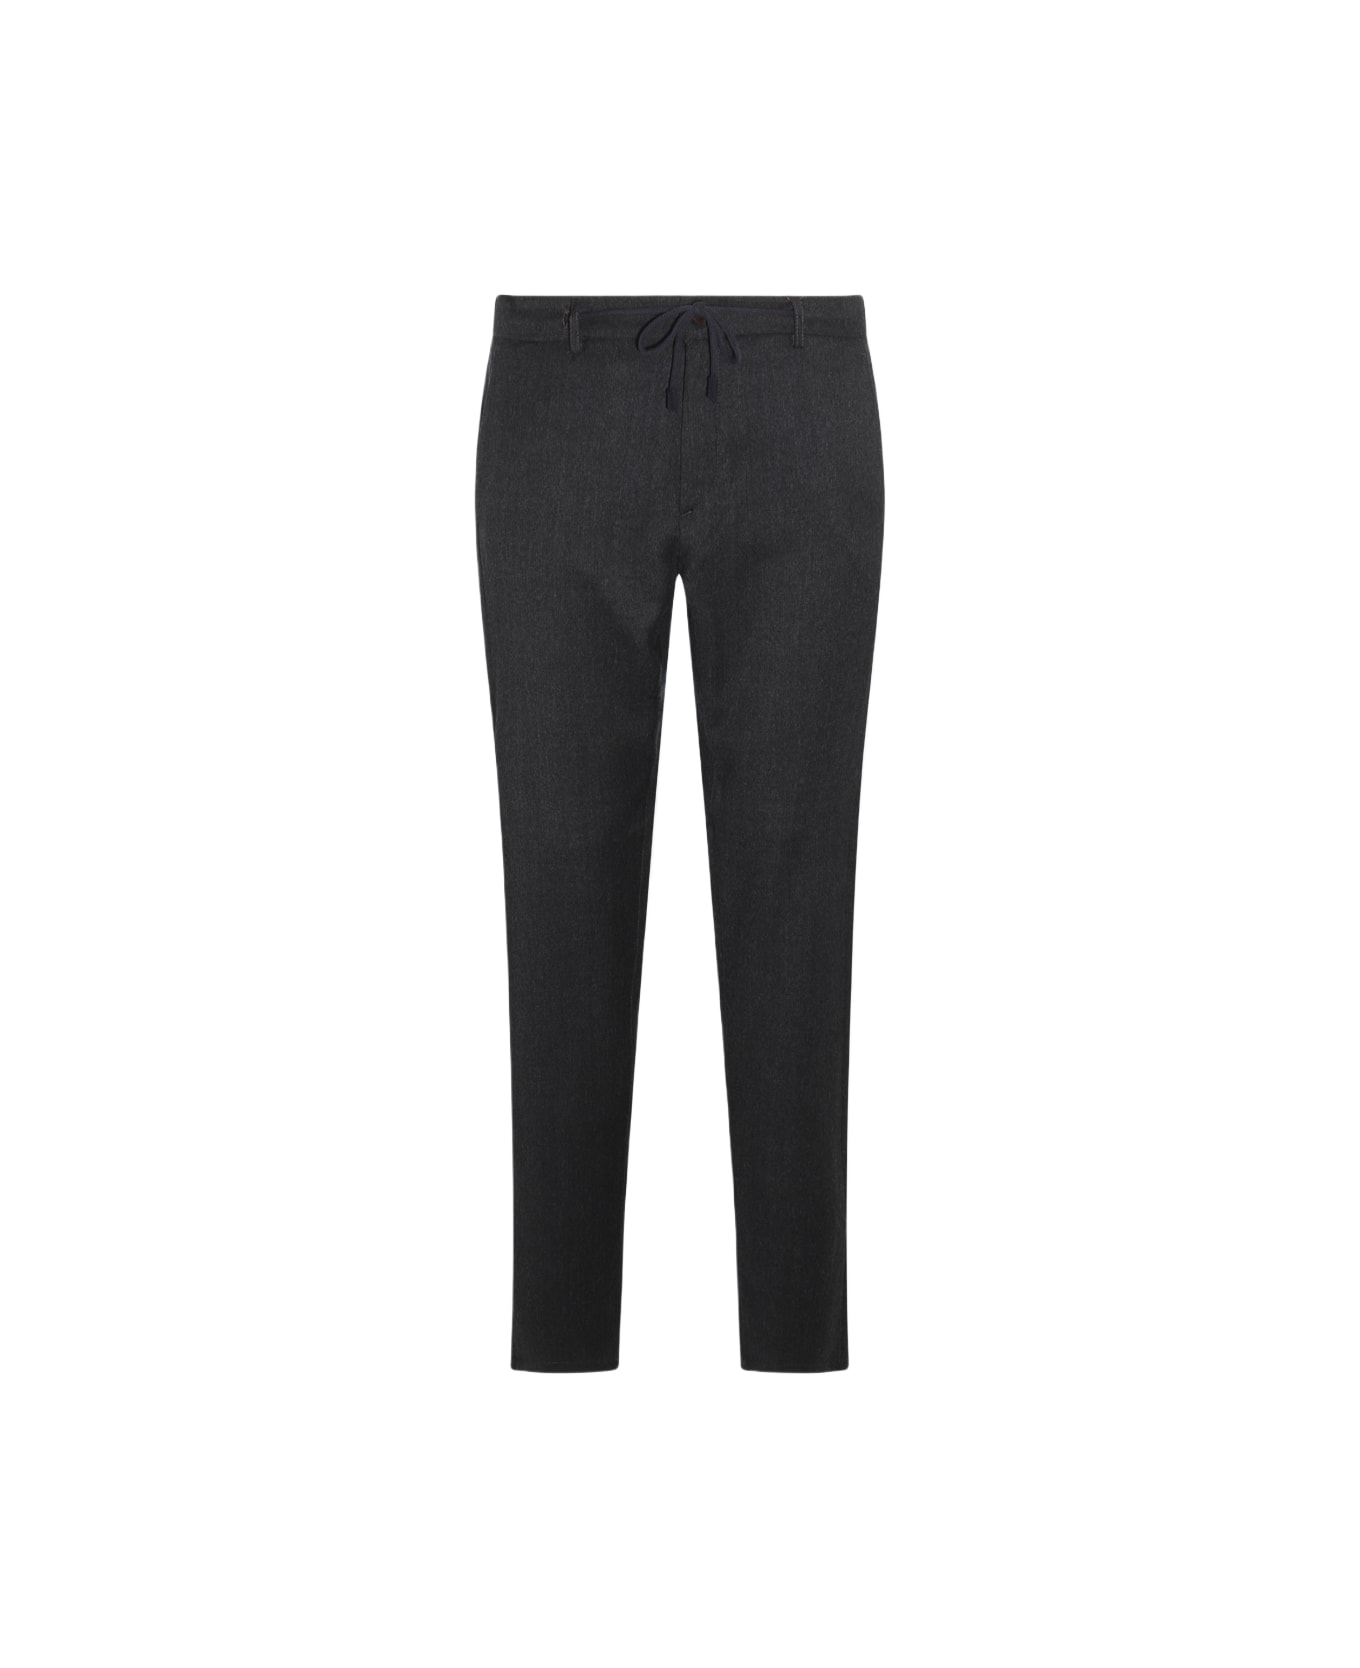 Canali Dark Grey Cotton Pants - Grey ボトムス